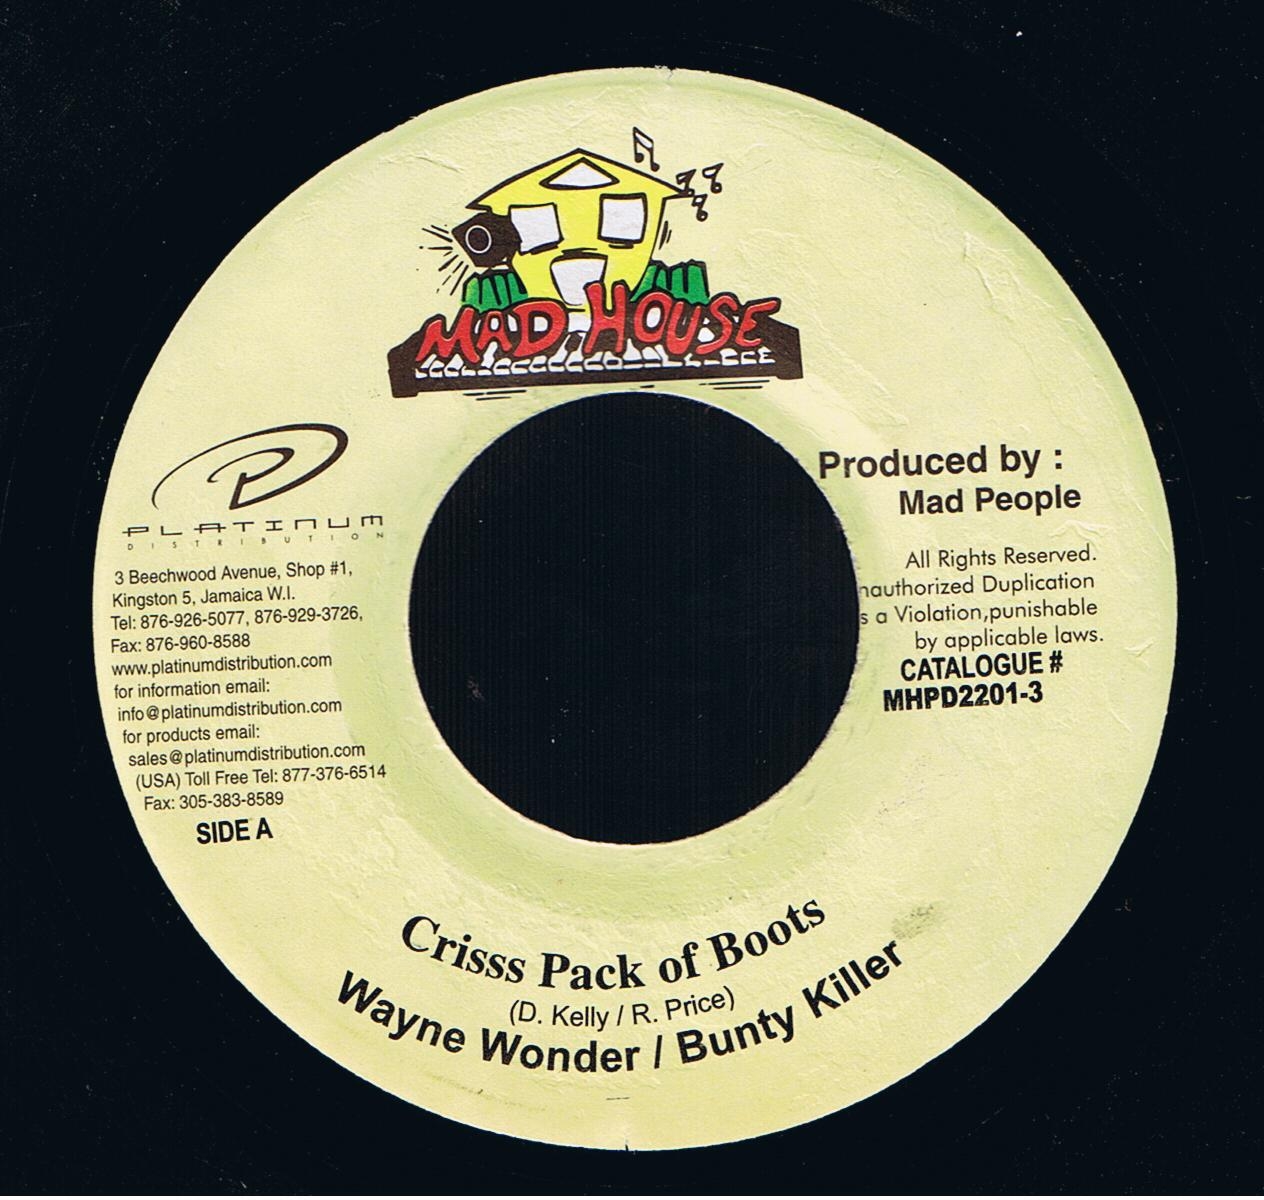 Wayne Wonder feat. Bounty Killer - Criss Pack Of Boots / Version (7") 